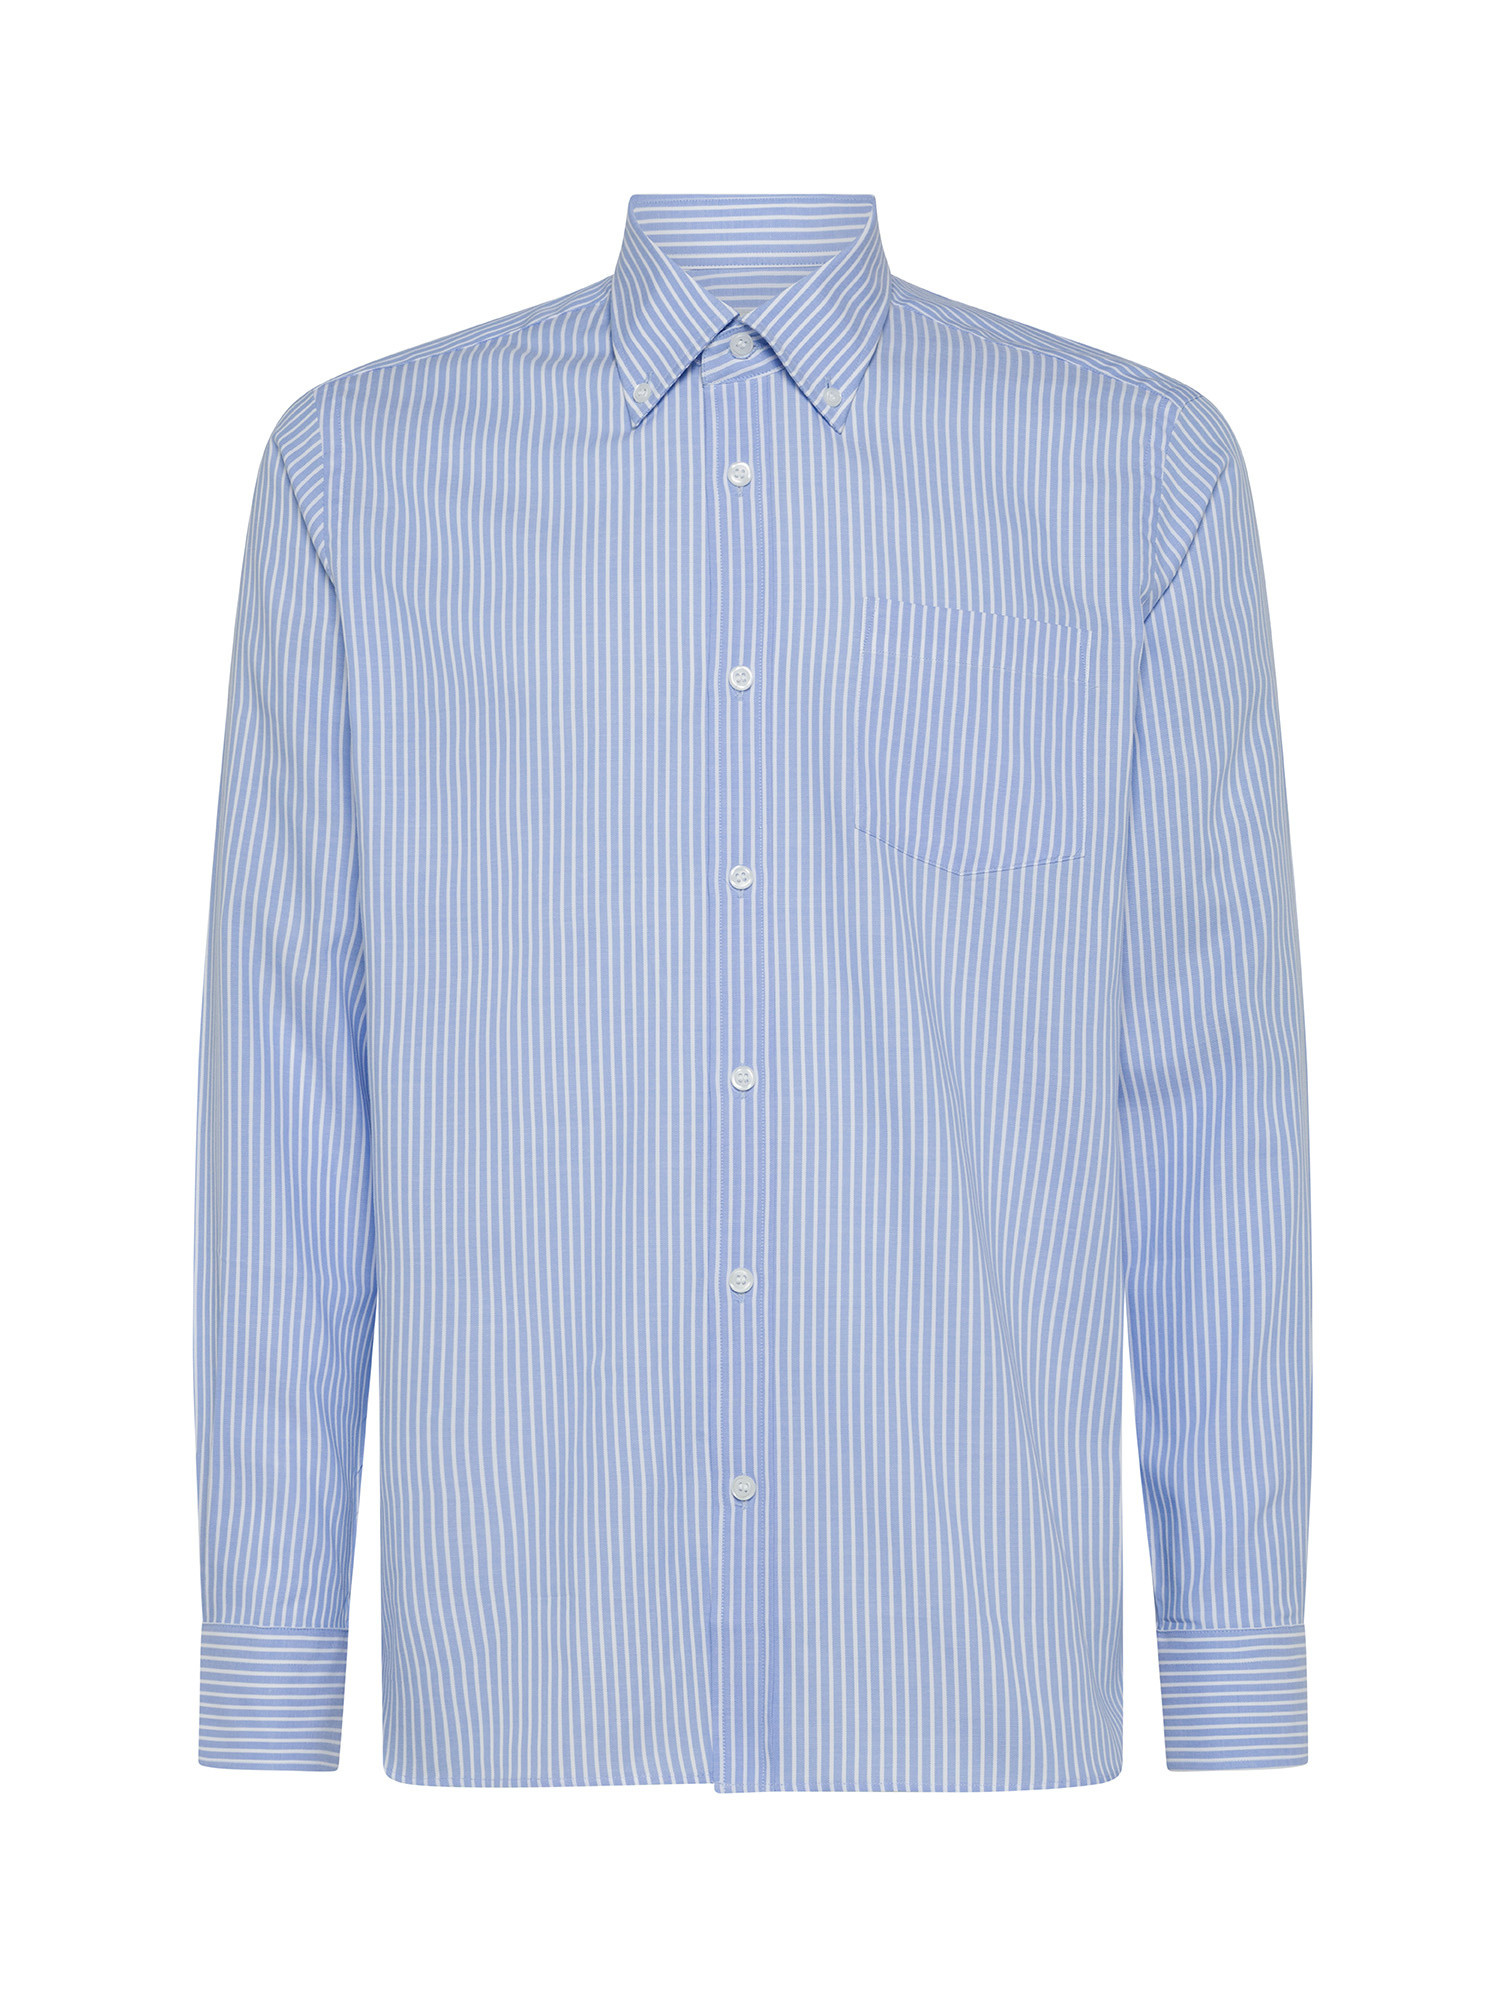 Luca D'Altieri - Tailor fit shirt in pure cotton, Light Blue, large image number 0